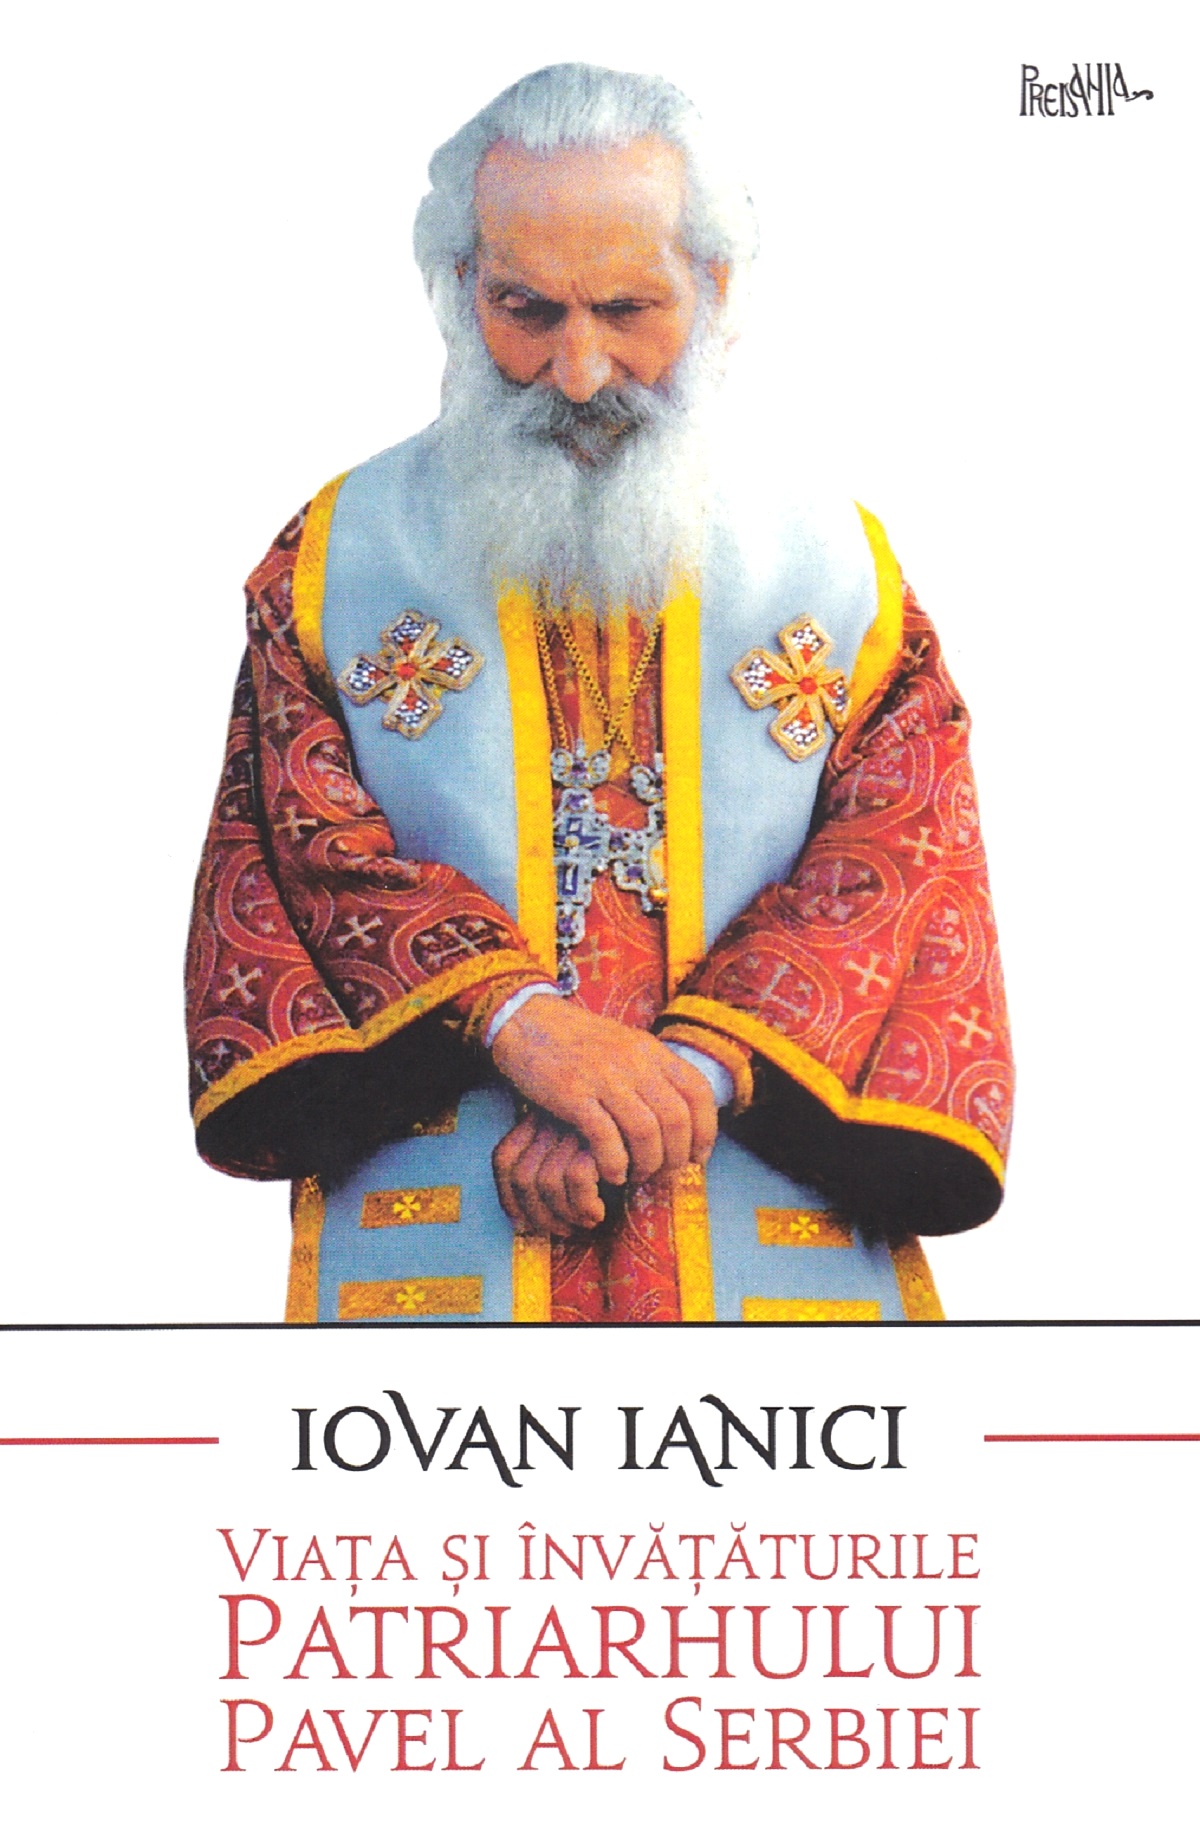 Patriarhul Pavel al Serbiei - Iovan Ianici